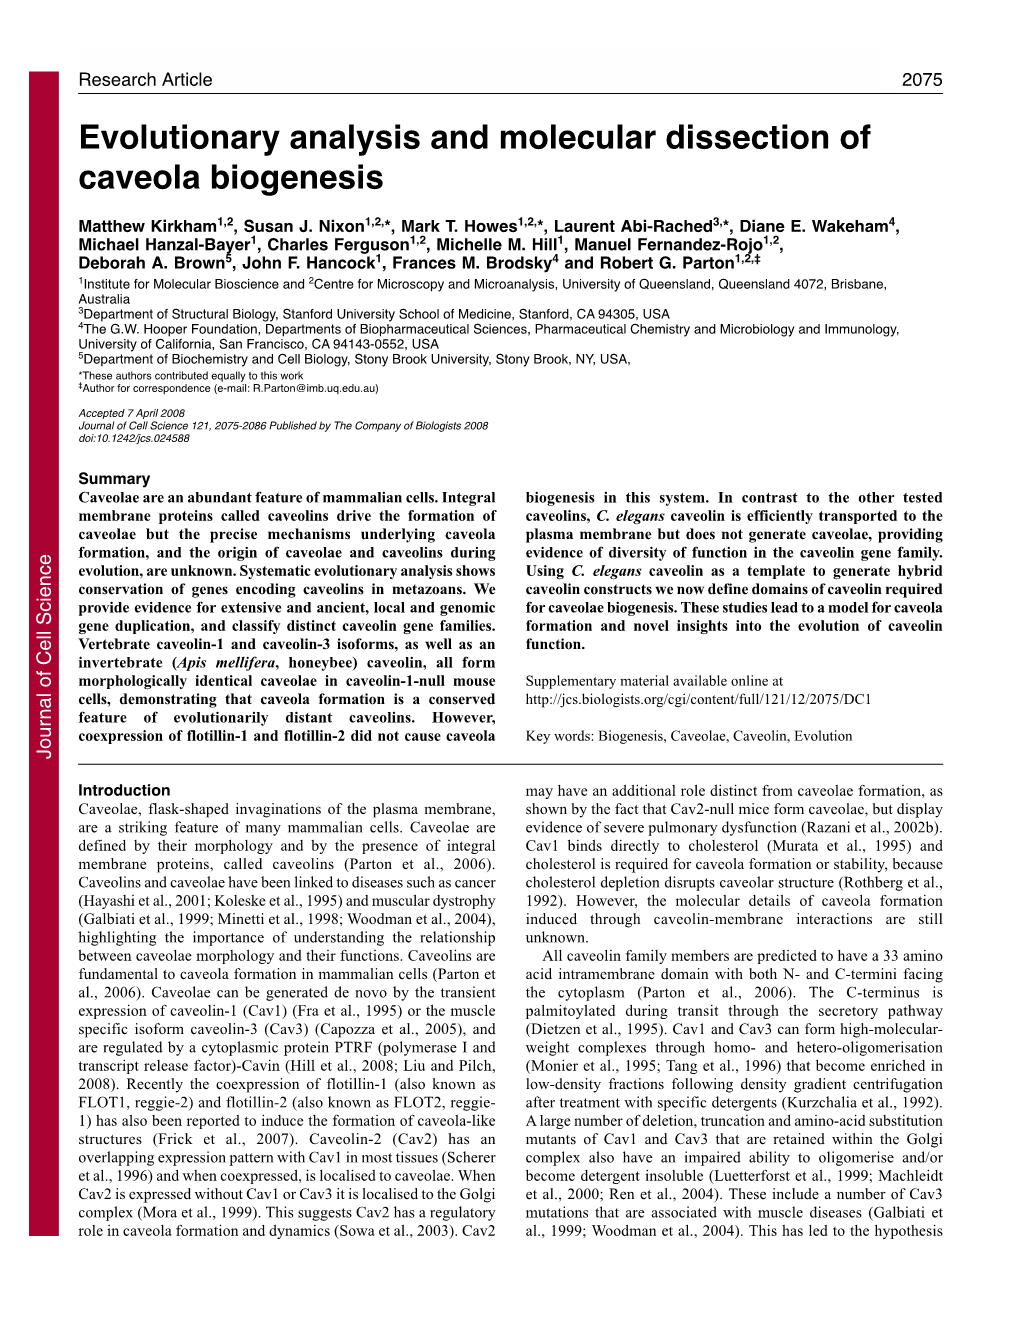 Evolutionary Analysis and Molecular Dissection of Caveola Biogenesis